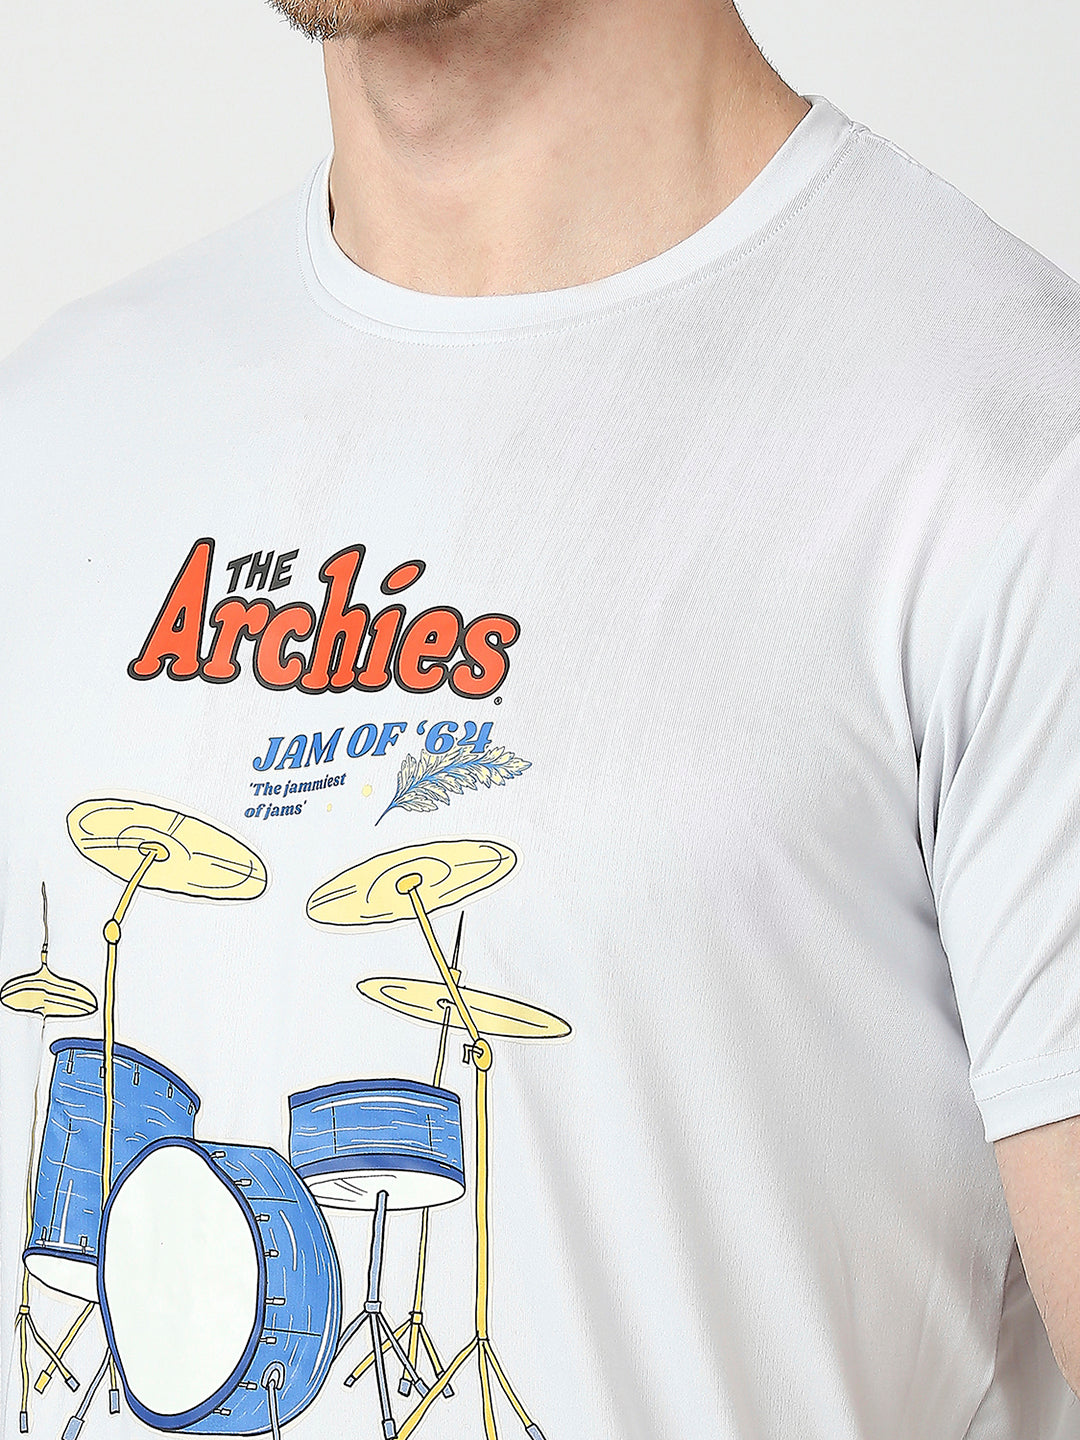 Archies White T-shirt Men